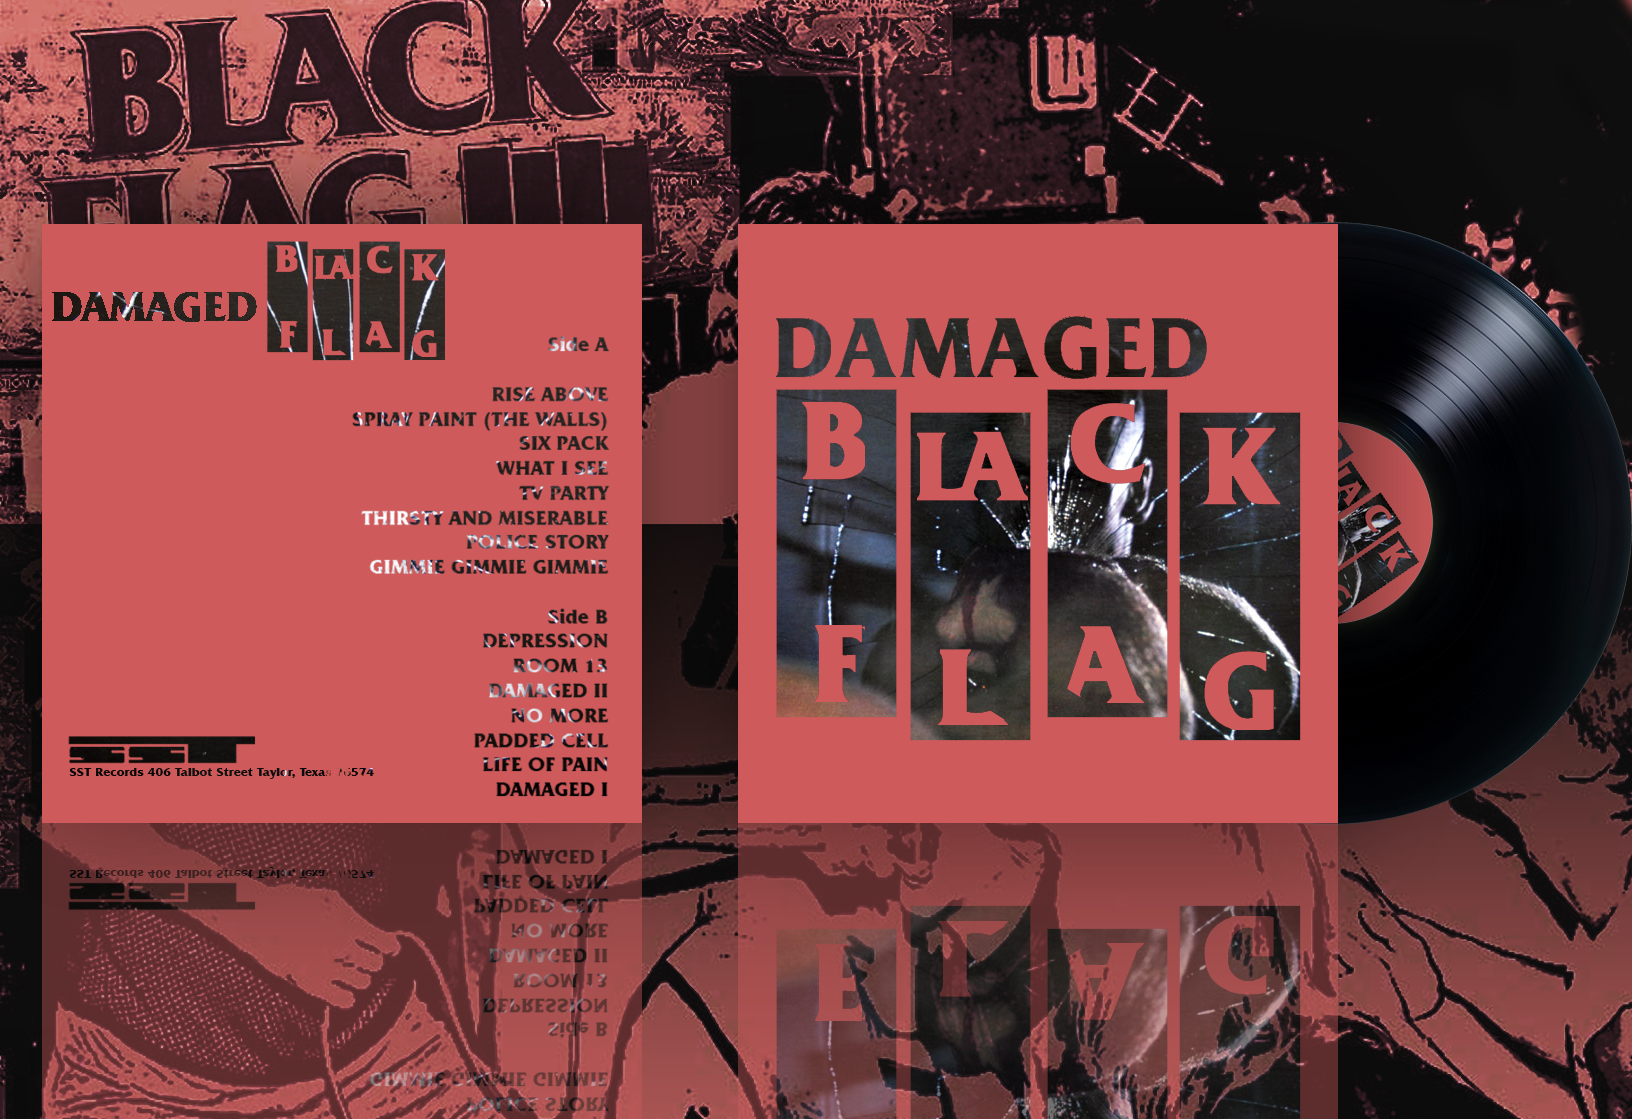 Black Flag - Damaged box cover